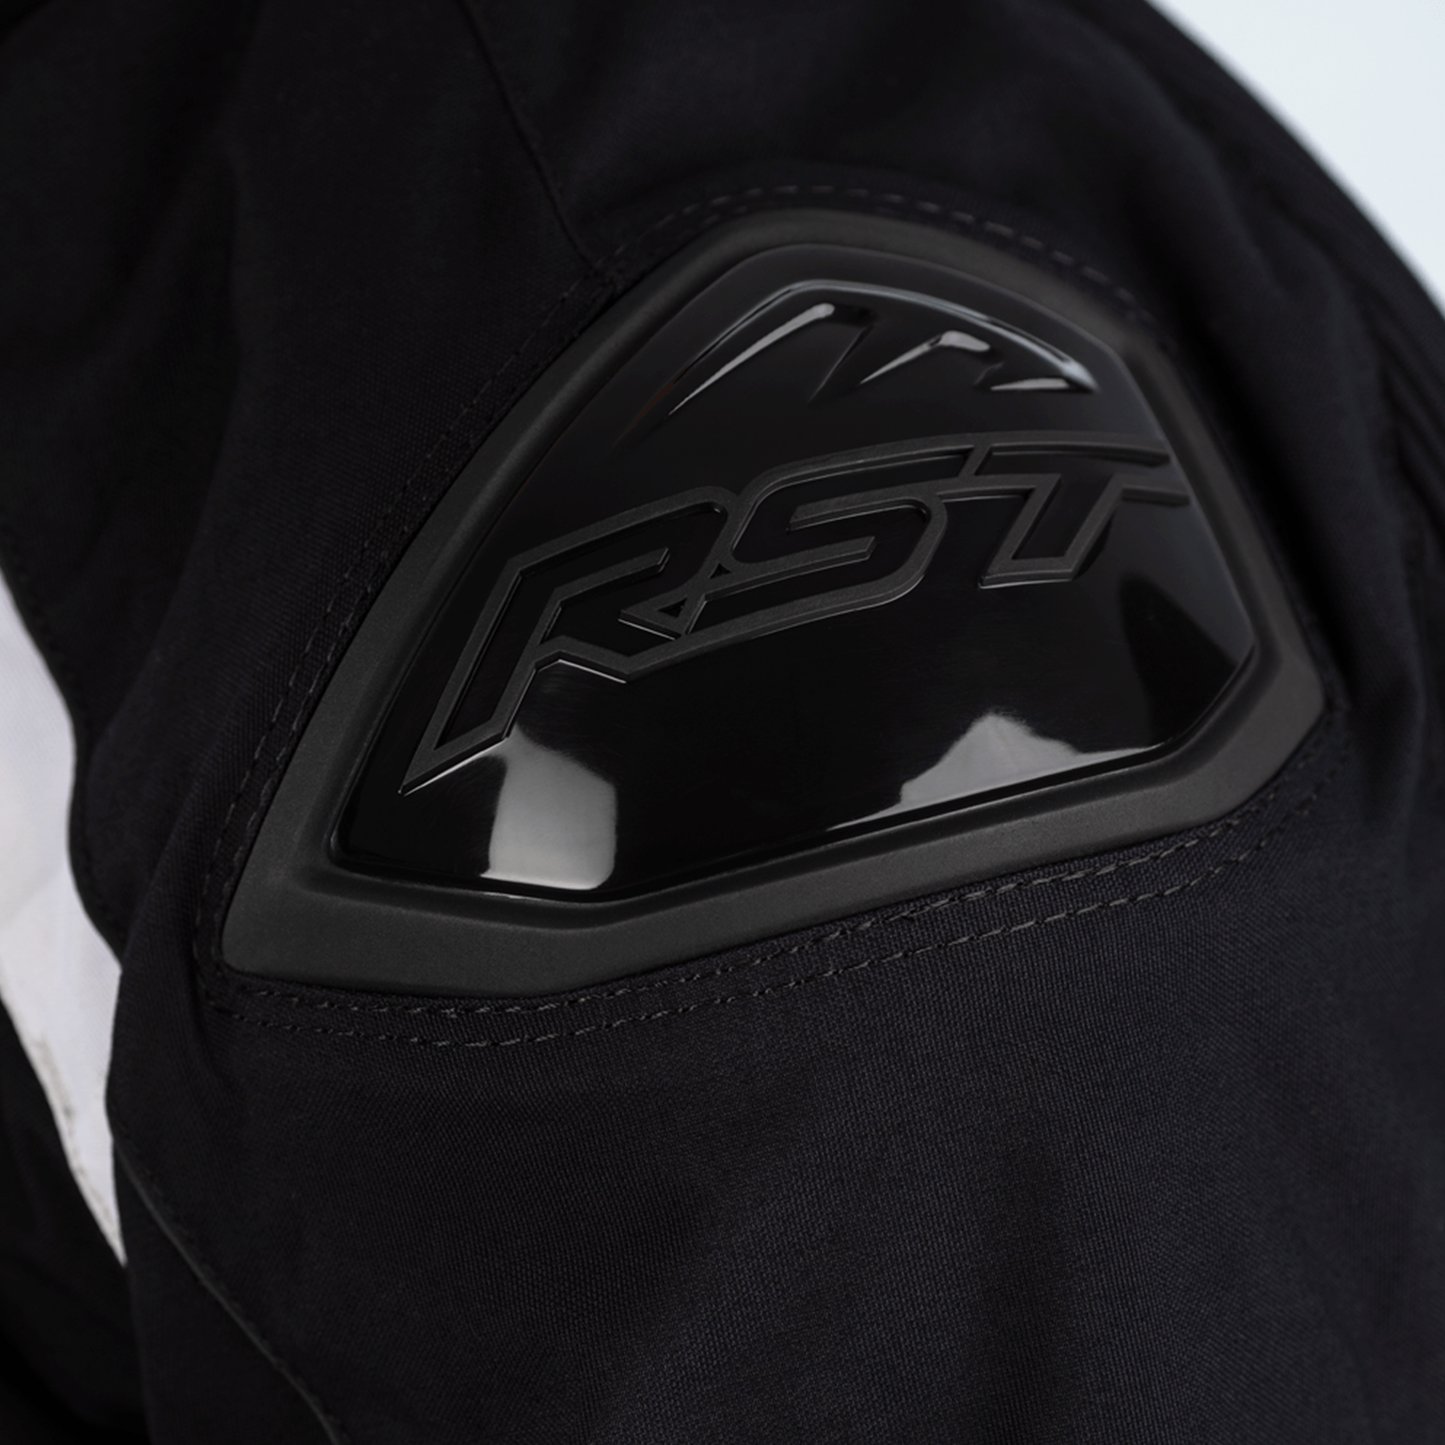 RST Sabre Airbag Textile Jacket - White (2555)